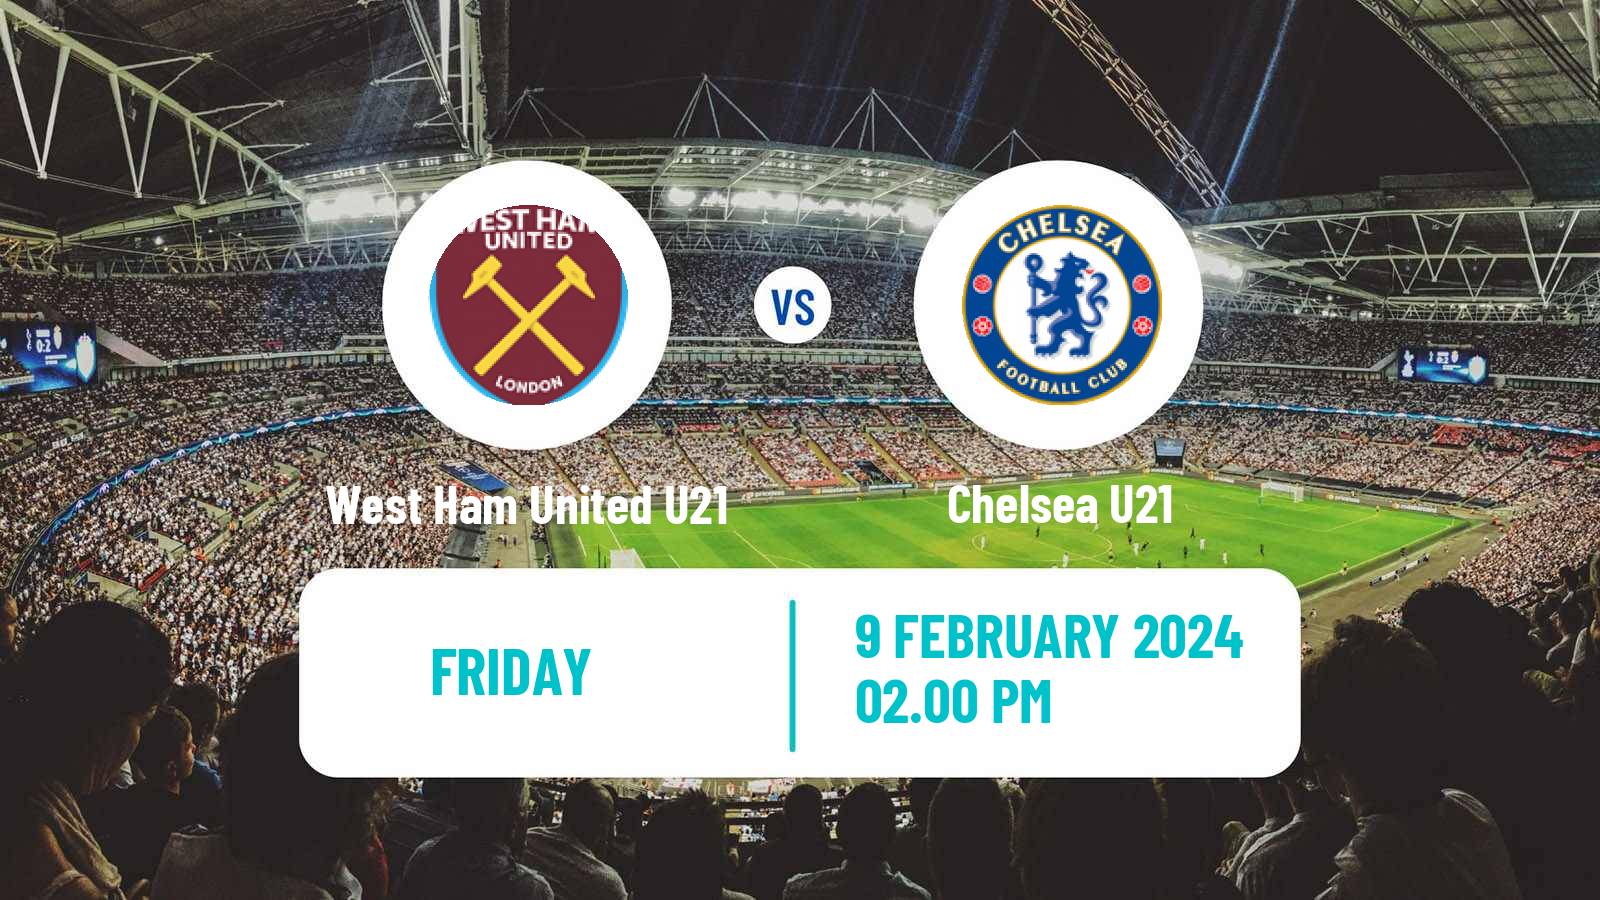 Soccer English Premier League 2 West Ham United U21 - Chelsea U21